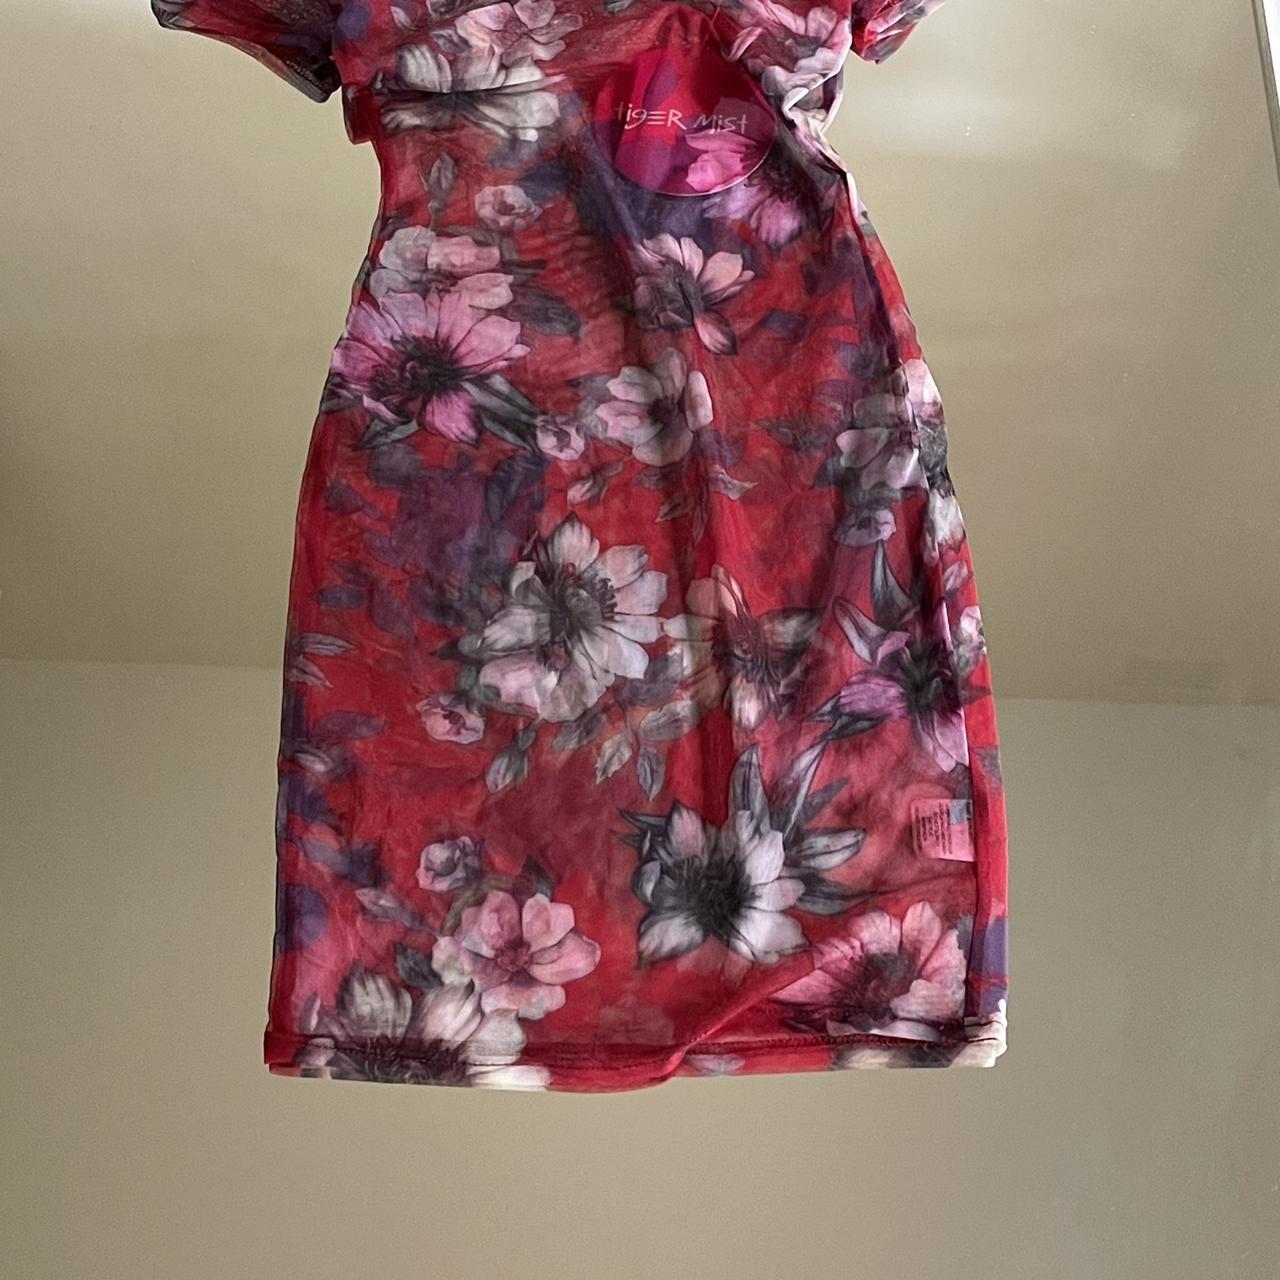 🌺 Tigermist floral mesh dress 🌺 This is such a hot... - Depop